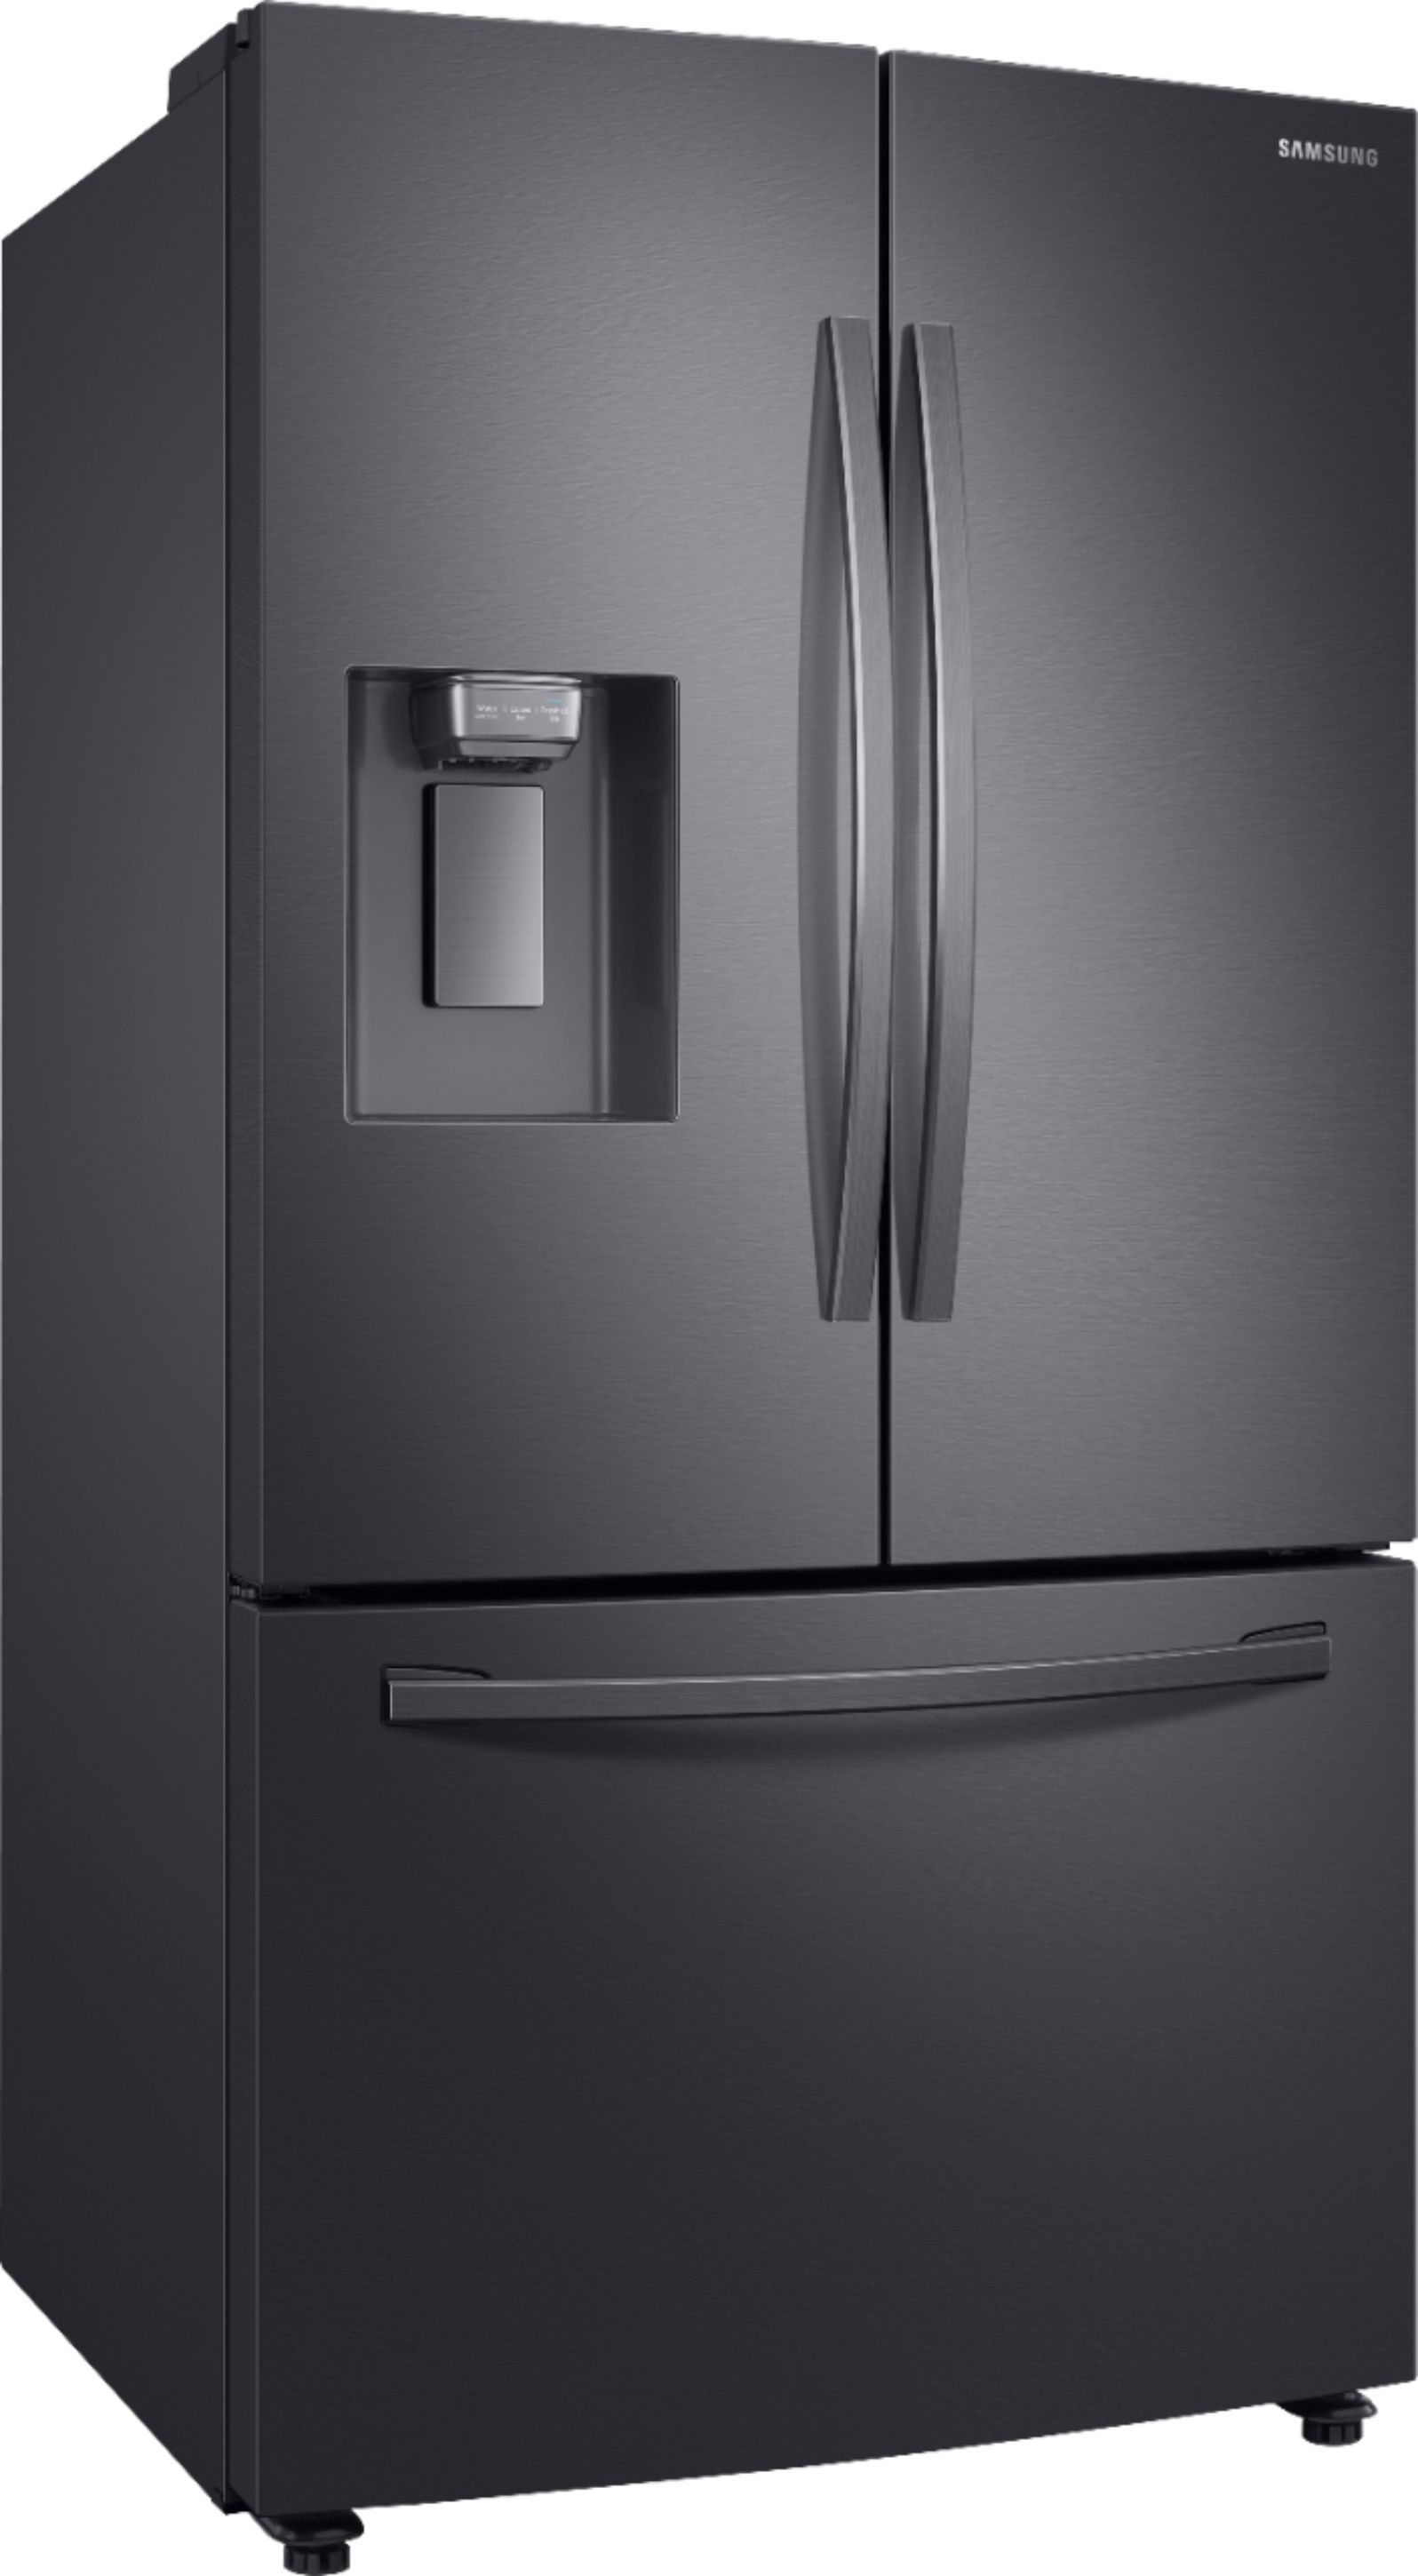 Samsung 28 Cu. Ft. French Door Fingerprint Resistant Refrigerator with Best Buy Samsung Black Stainless Steel Refrigerator